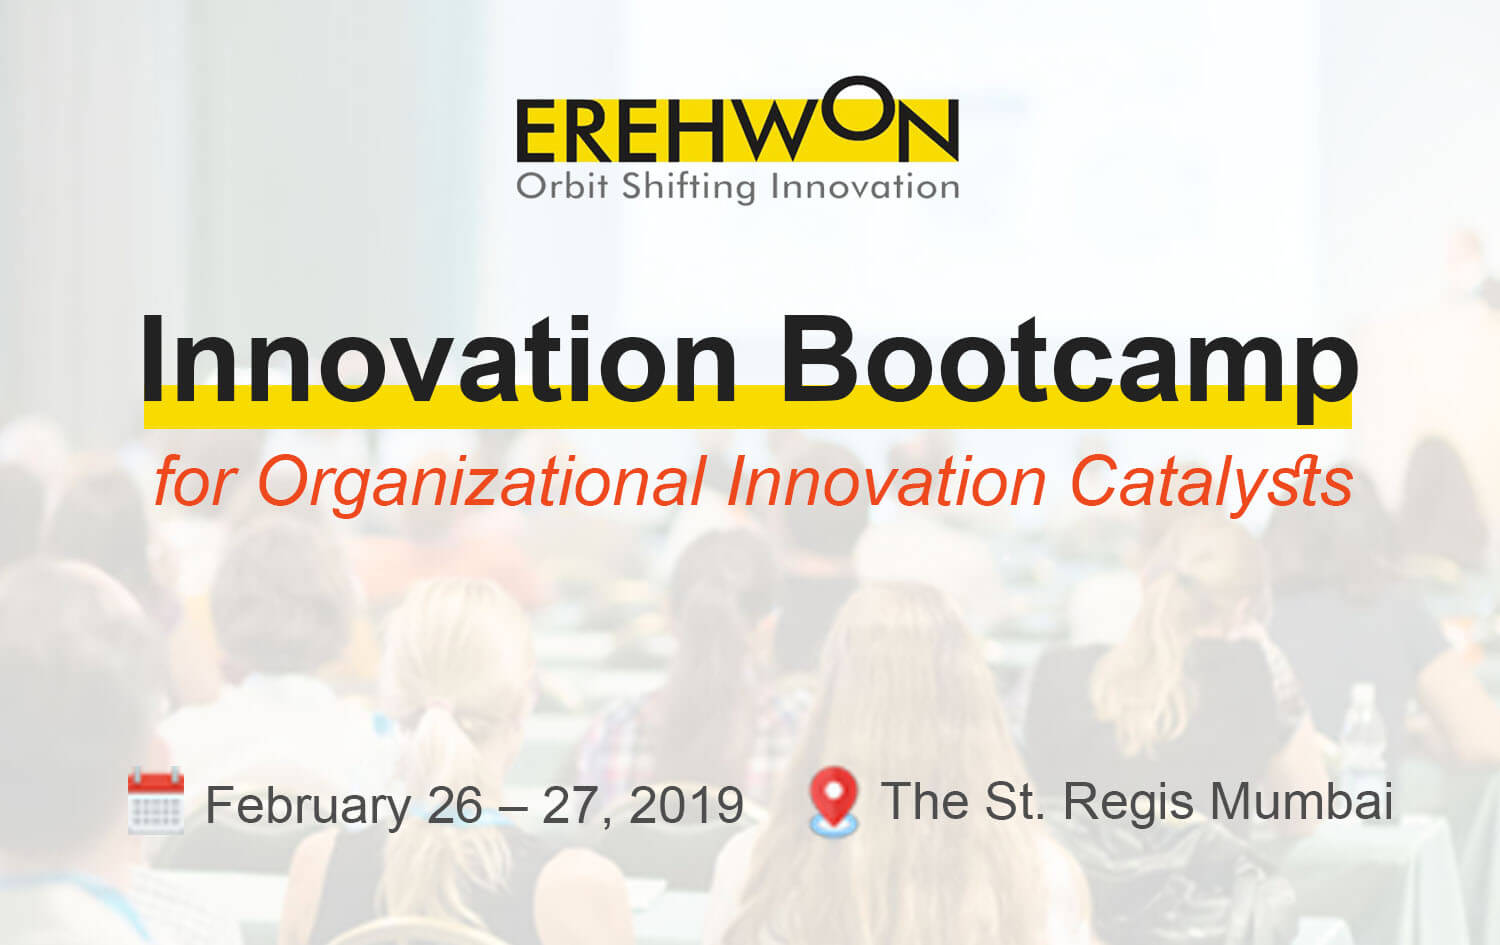 Erehwon Innovation Bootcamp